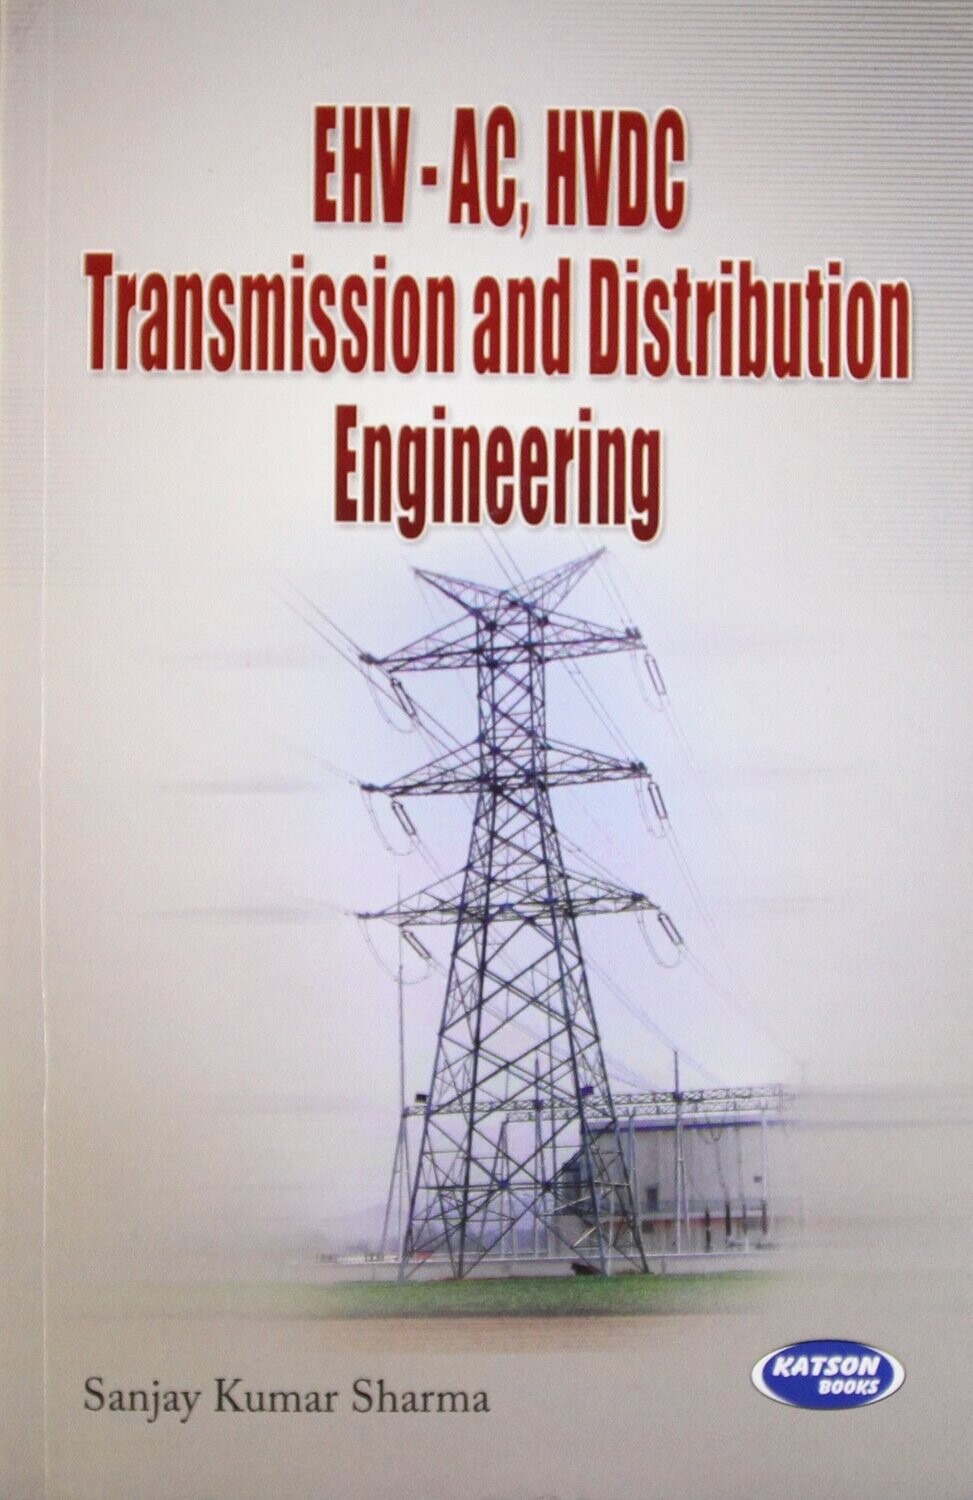 EHV-AC, HVDC Transmission and Distribution Engineering by Sanjay Kumar Sharma